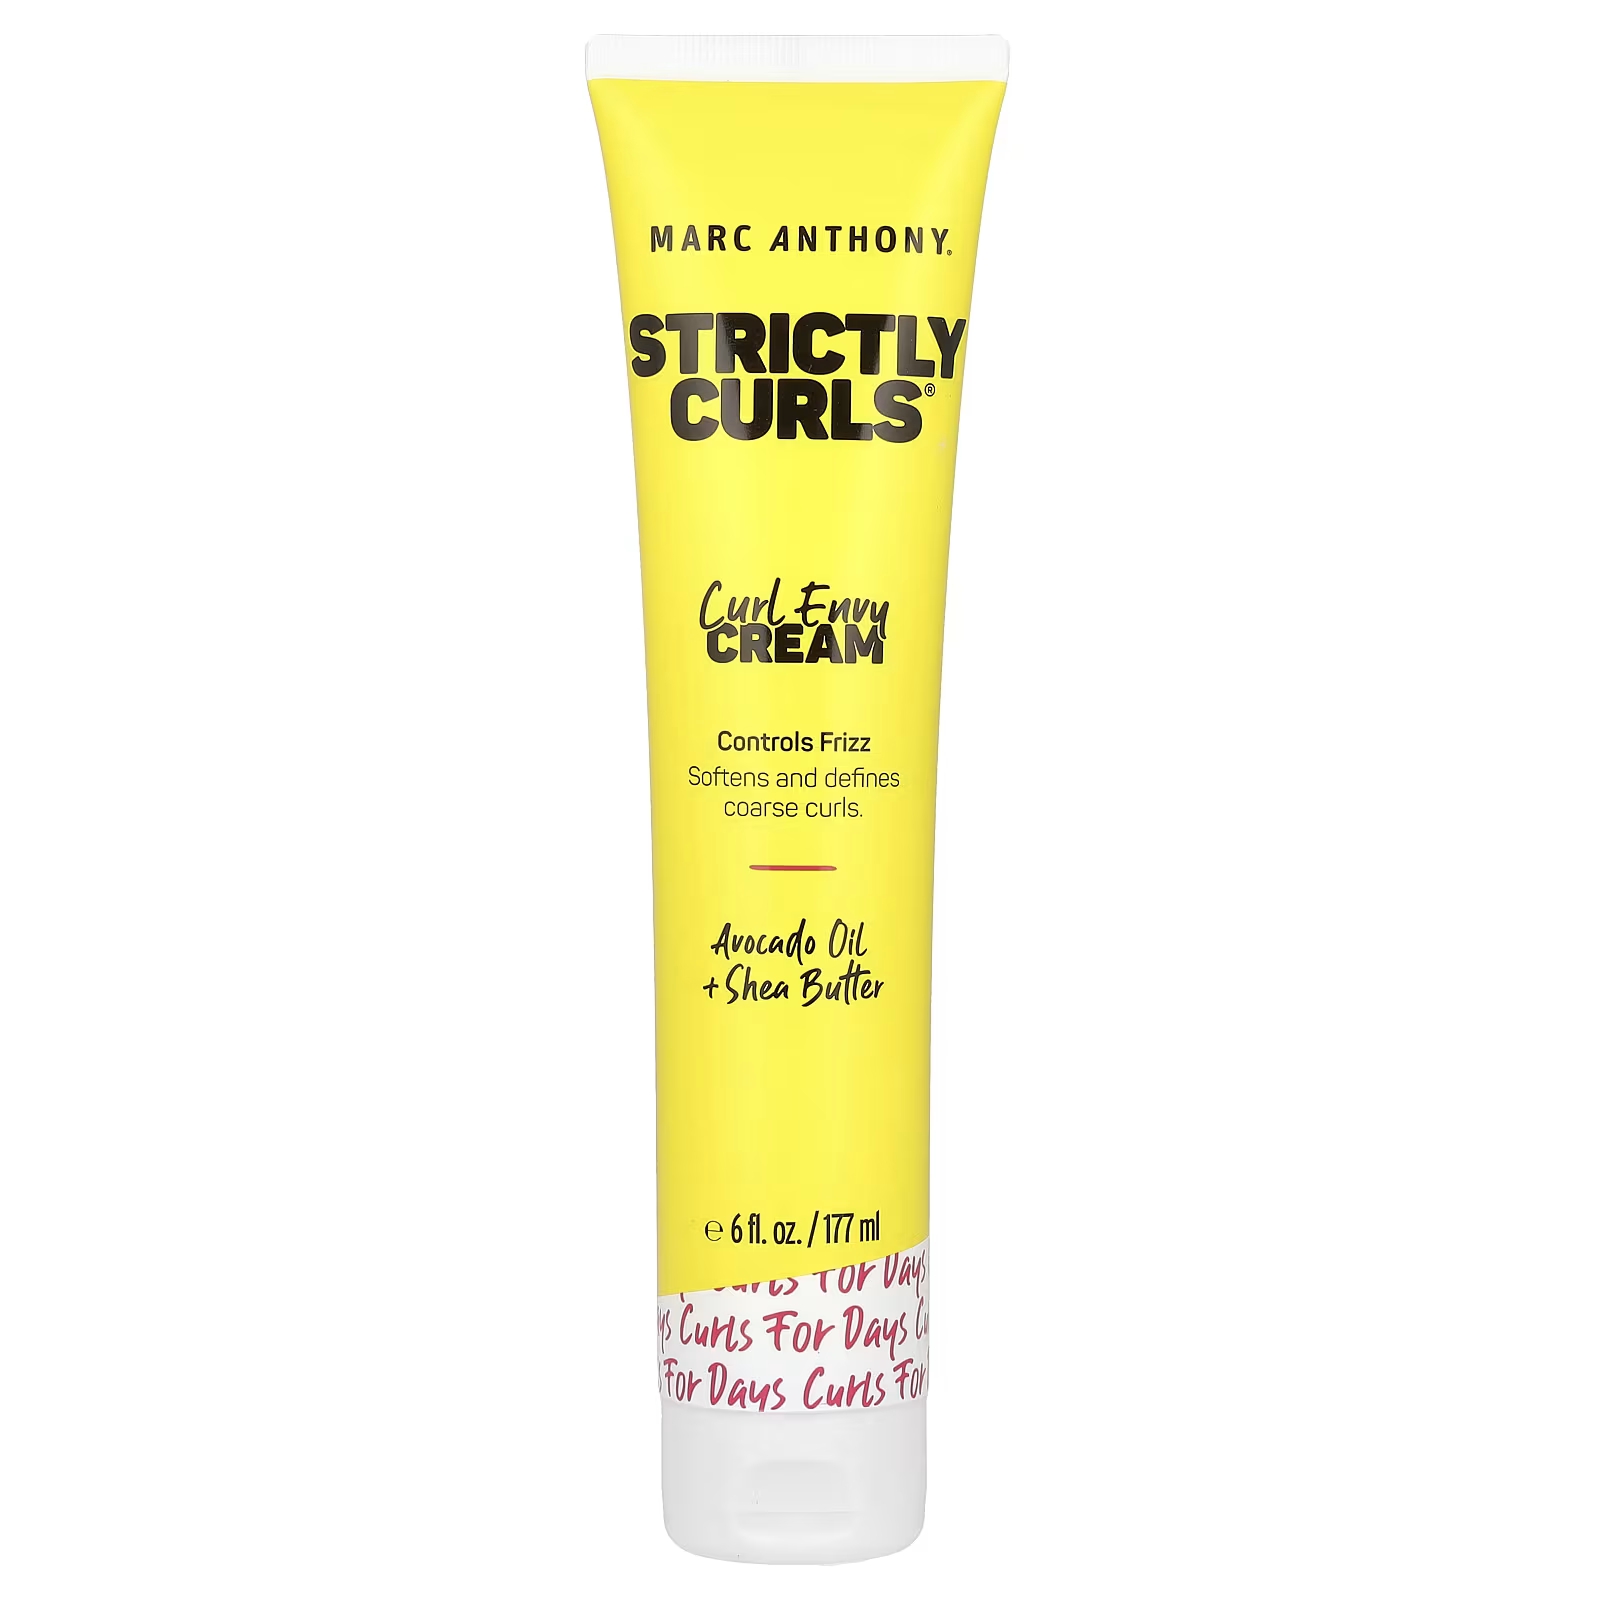 marc anthony strictly curls triple blend conditioner 8 4 fl oz 250 ml Marc Anthony Strictly Curls Curl Envy Cream, 6 жидких унций (177 мл)